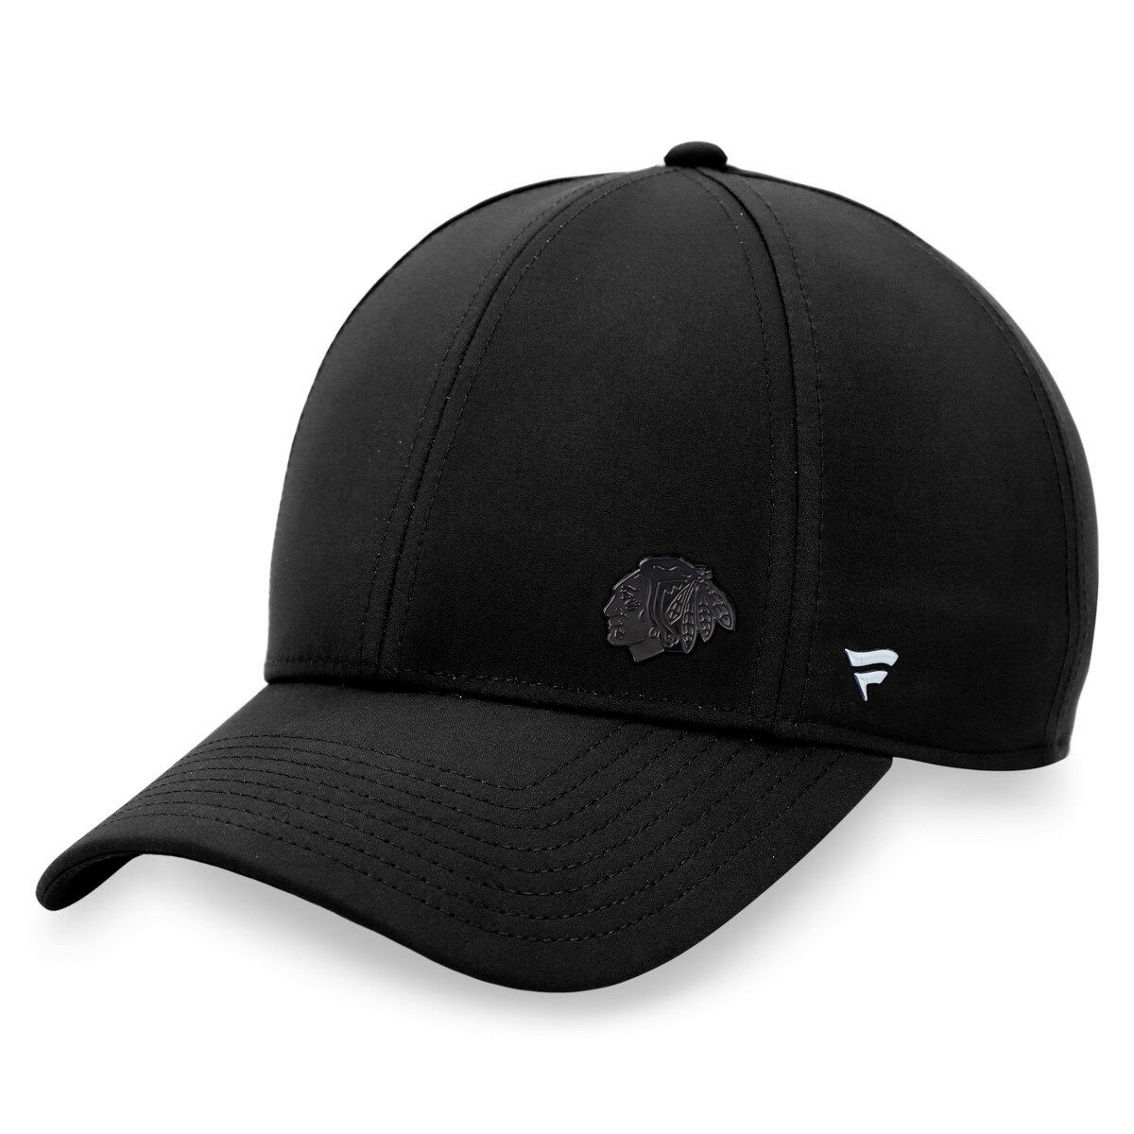 Fanatics Branded Women's Black Chicago Blackhawks Authentic Pro Road Structured Adjustable Hat - Image 2 of 4